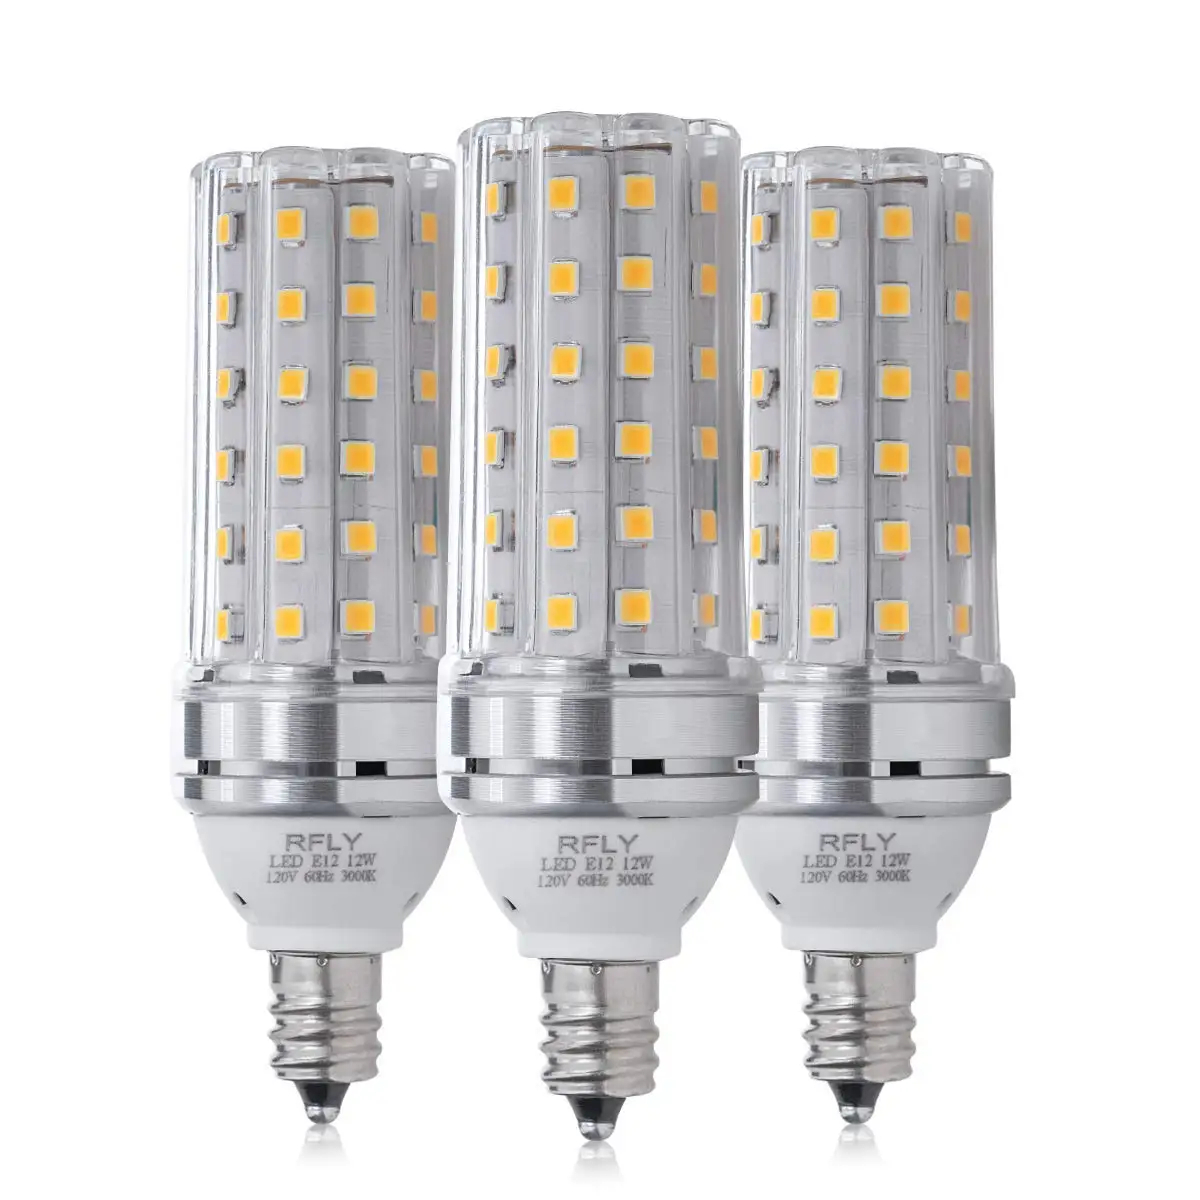 JKLcom E12 LED Candelabra Bulb 12W LED Candle Bulbs,90-100W Light Bulbs Equivalent,E12 Candelabra Base,Warm White 3000K,Non-Dimmable,Torpedo Shape,Pack of 4